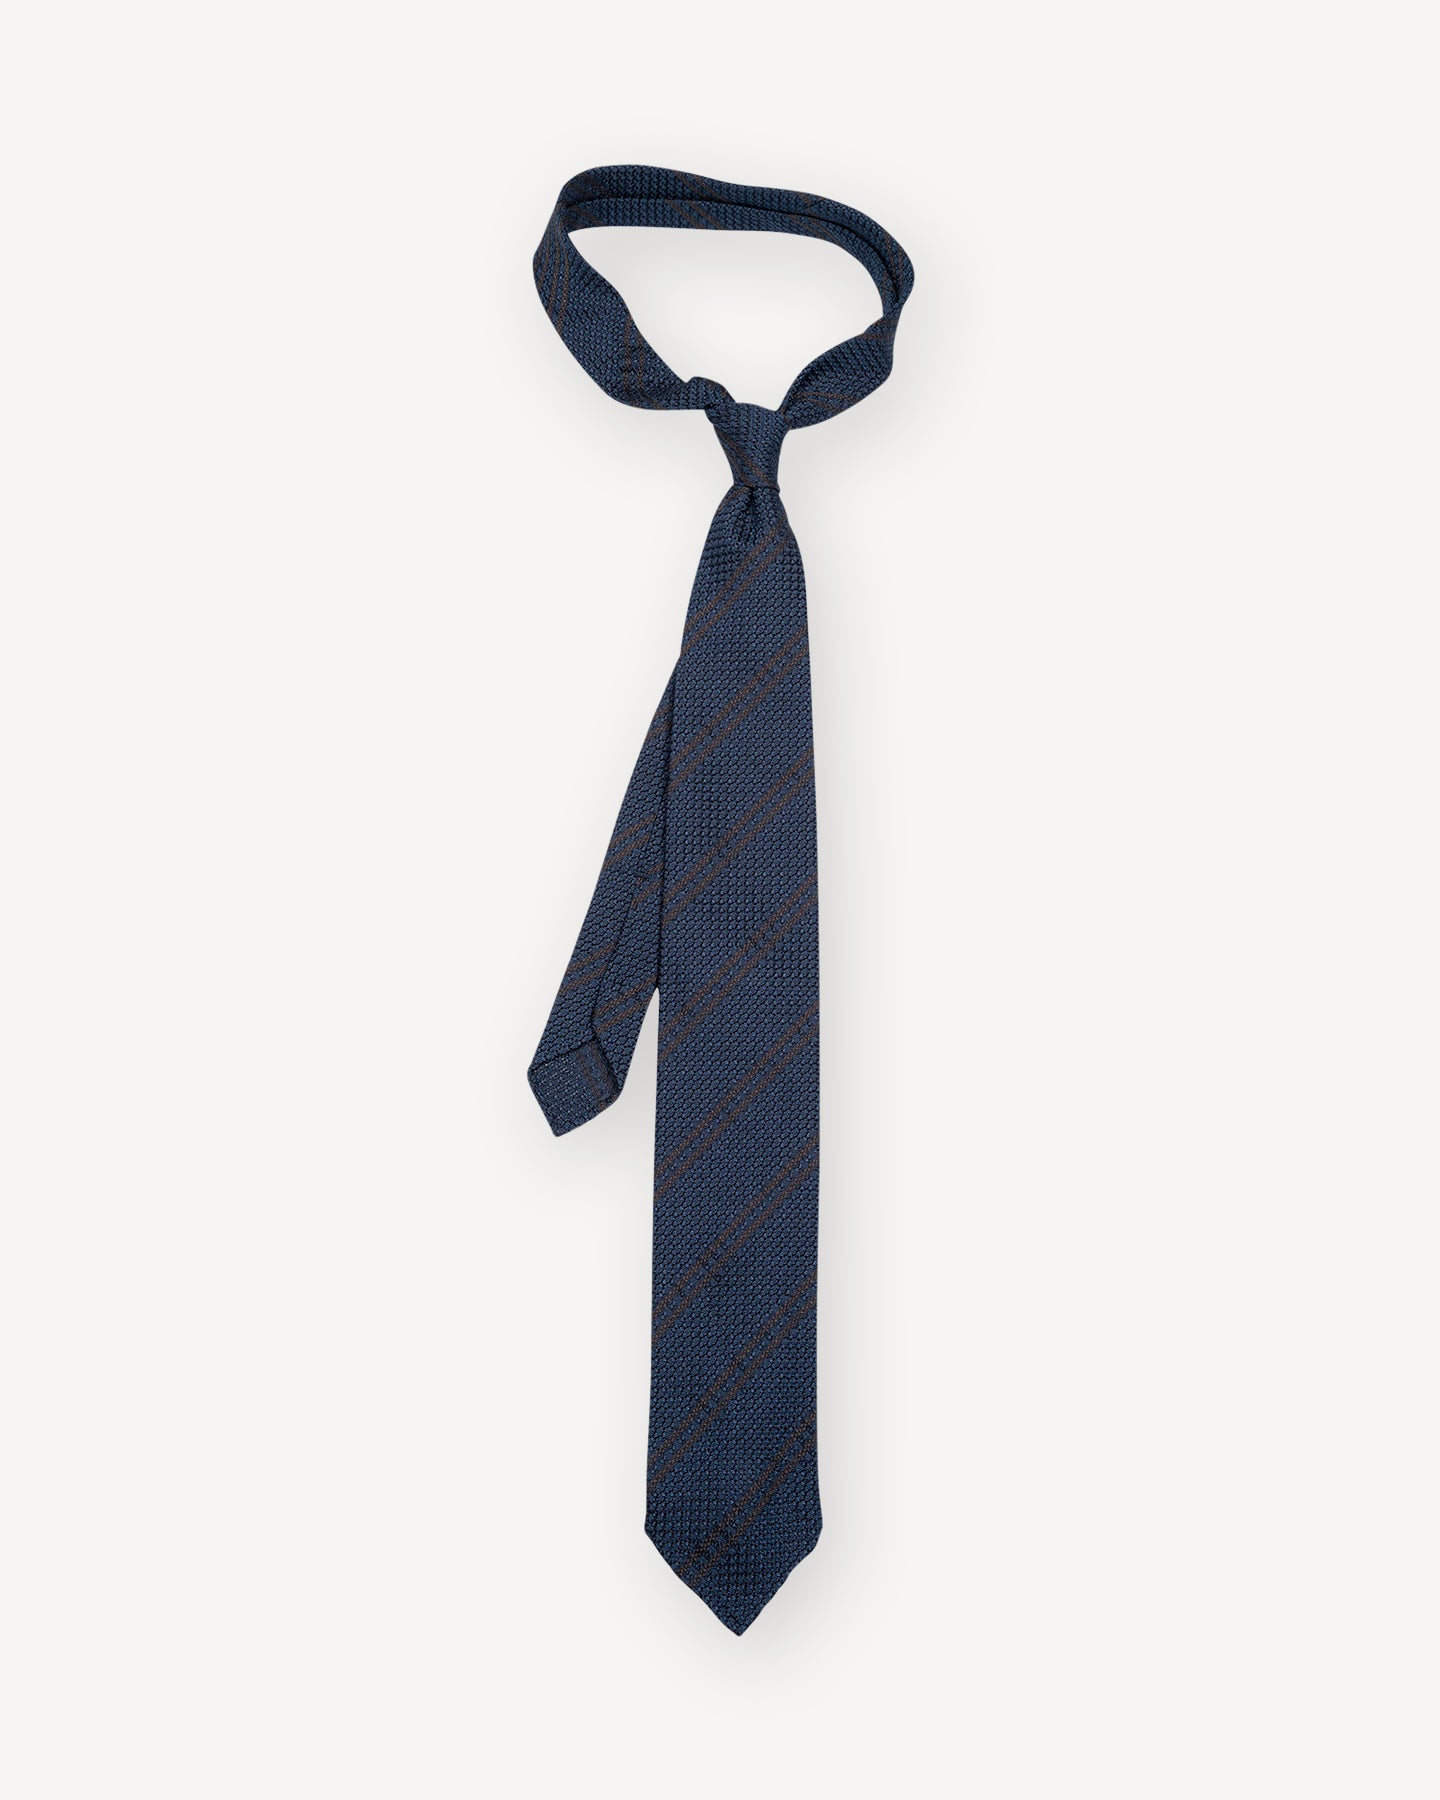 Navy Blue Grenadine Silk Tie with Green Stripes